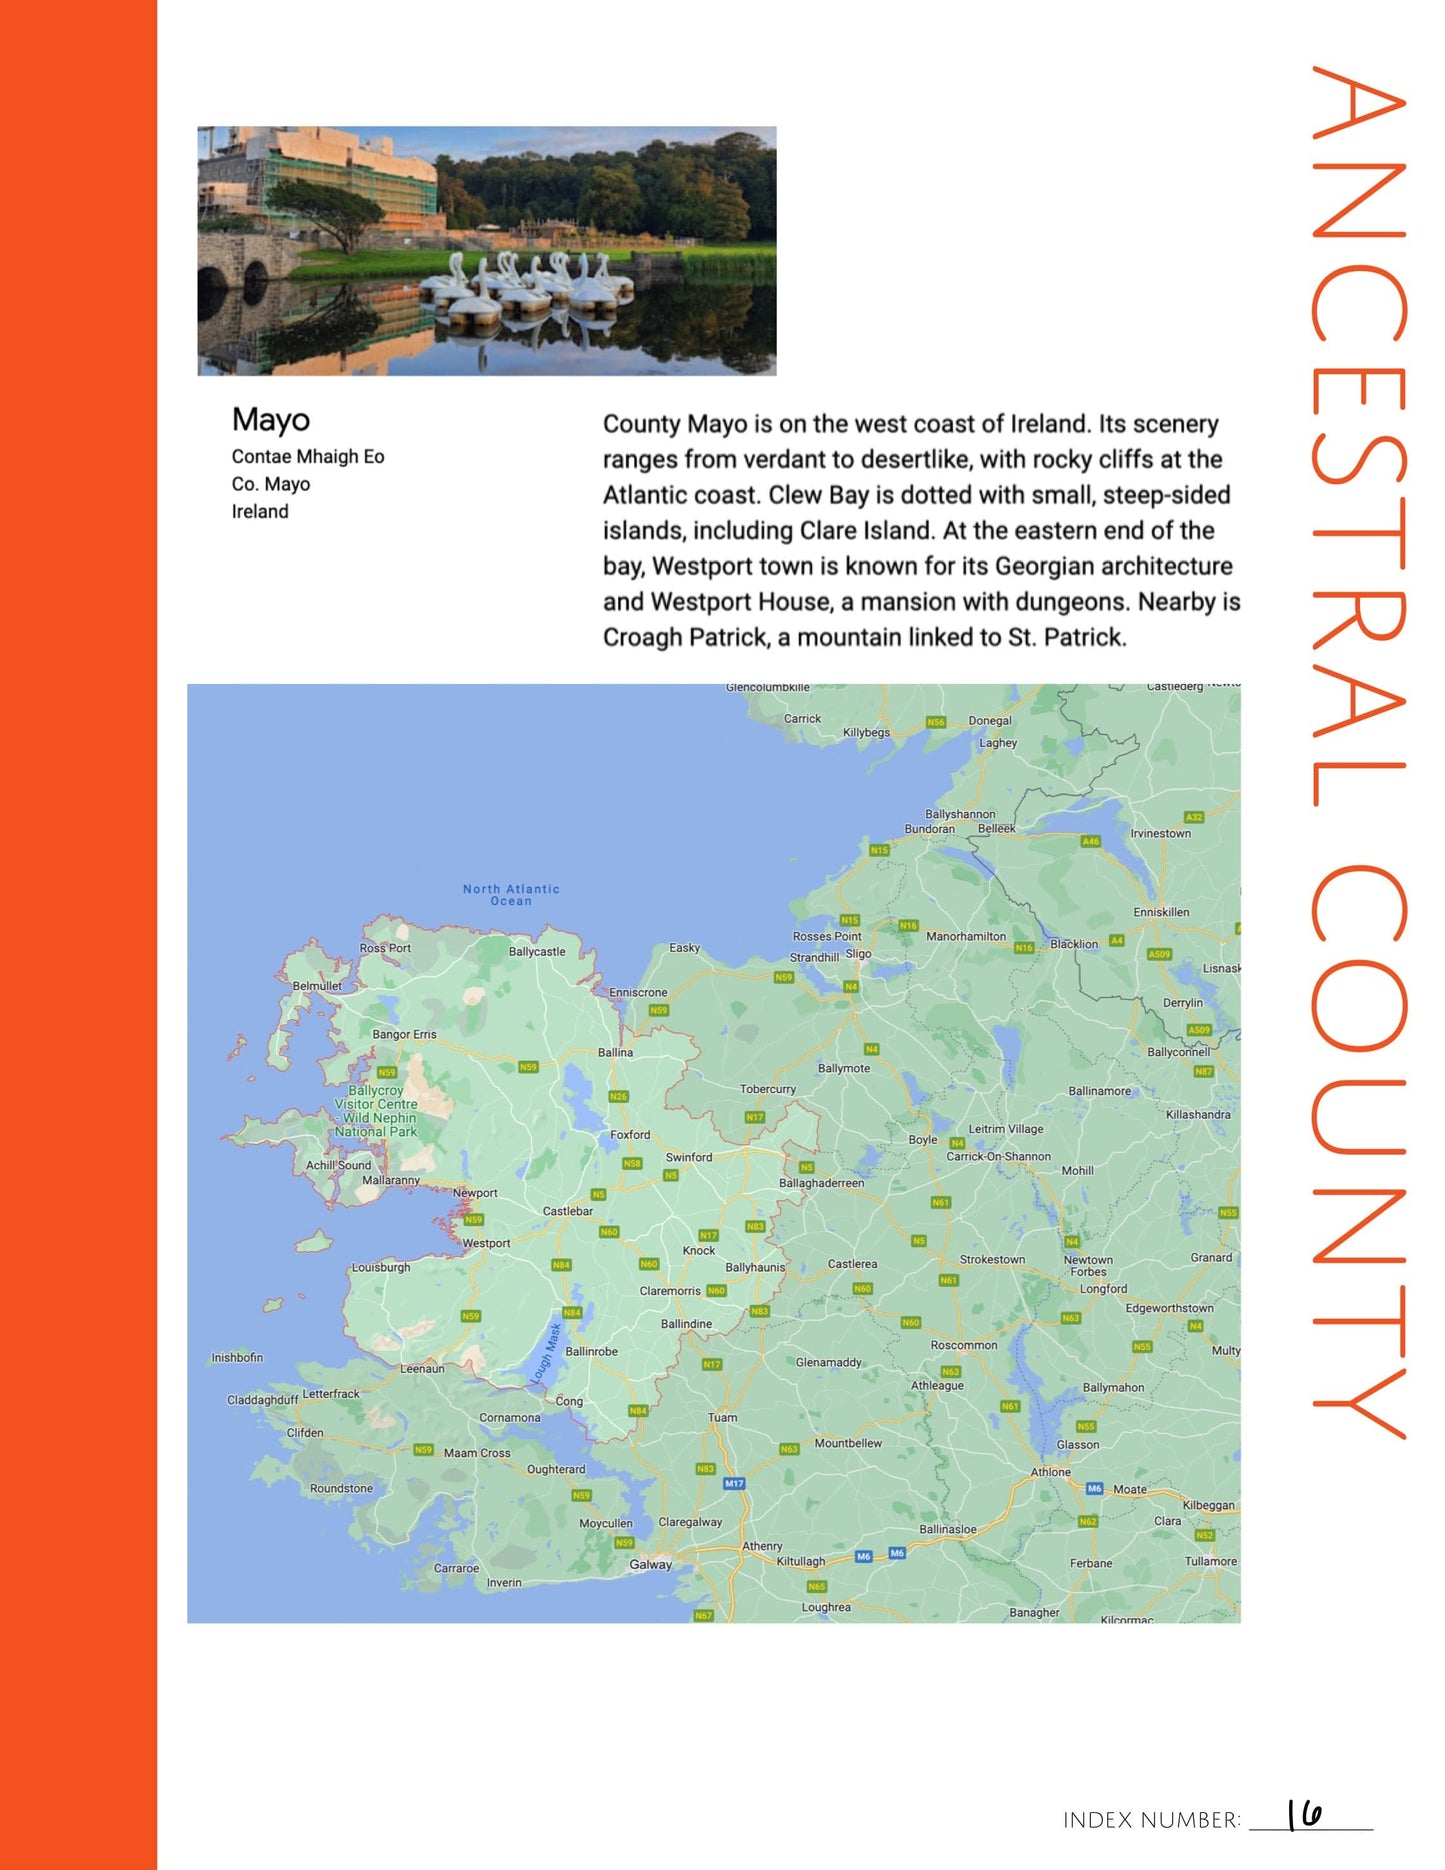 Ancestral County Page: Printable Genealogy Form (Digital Download)